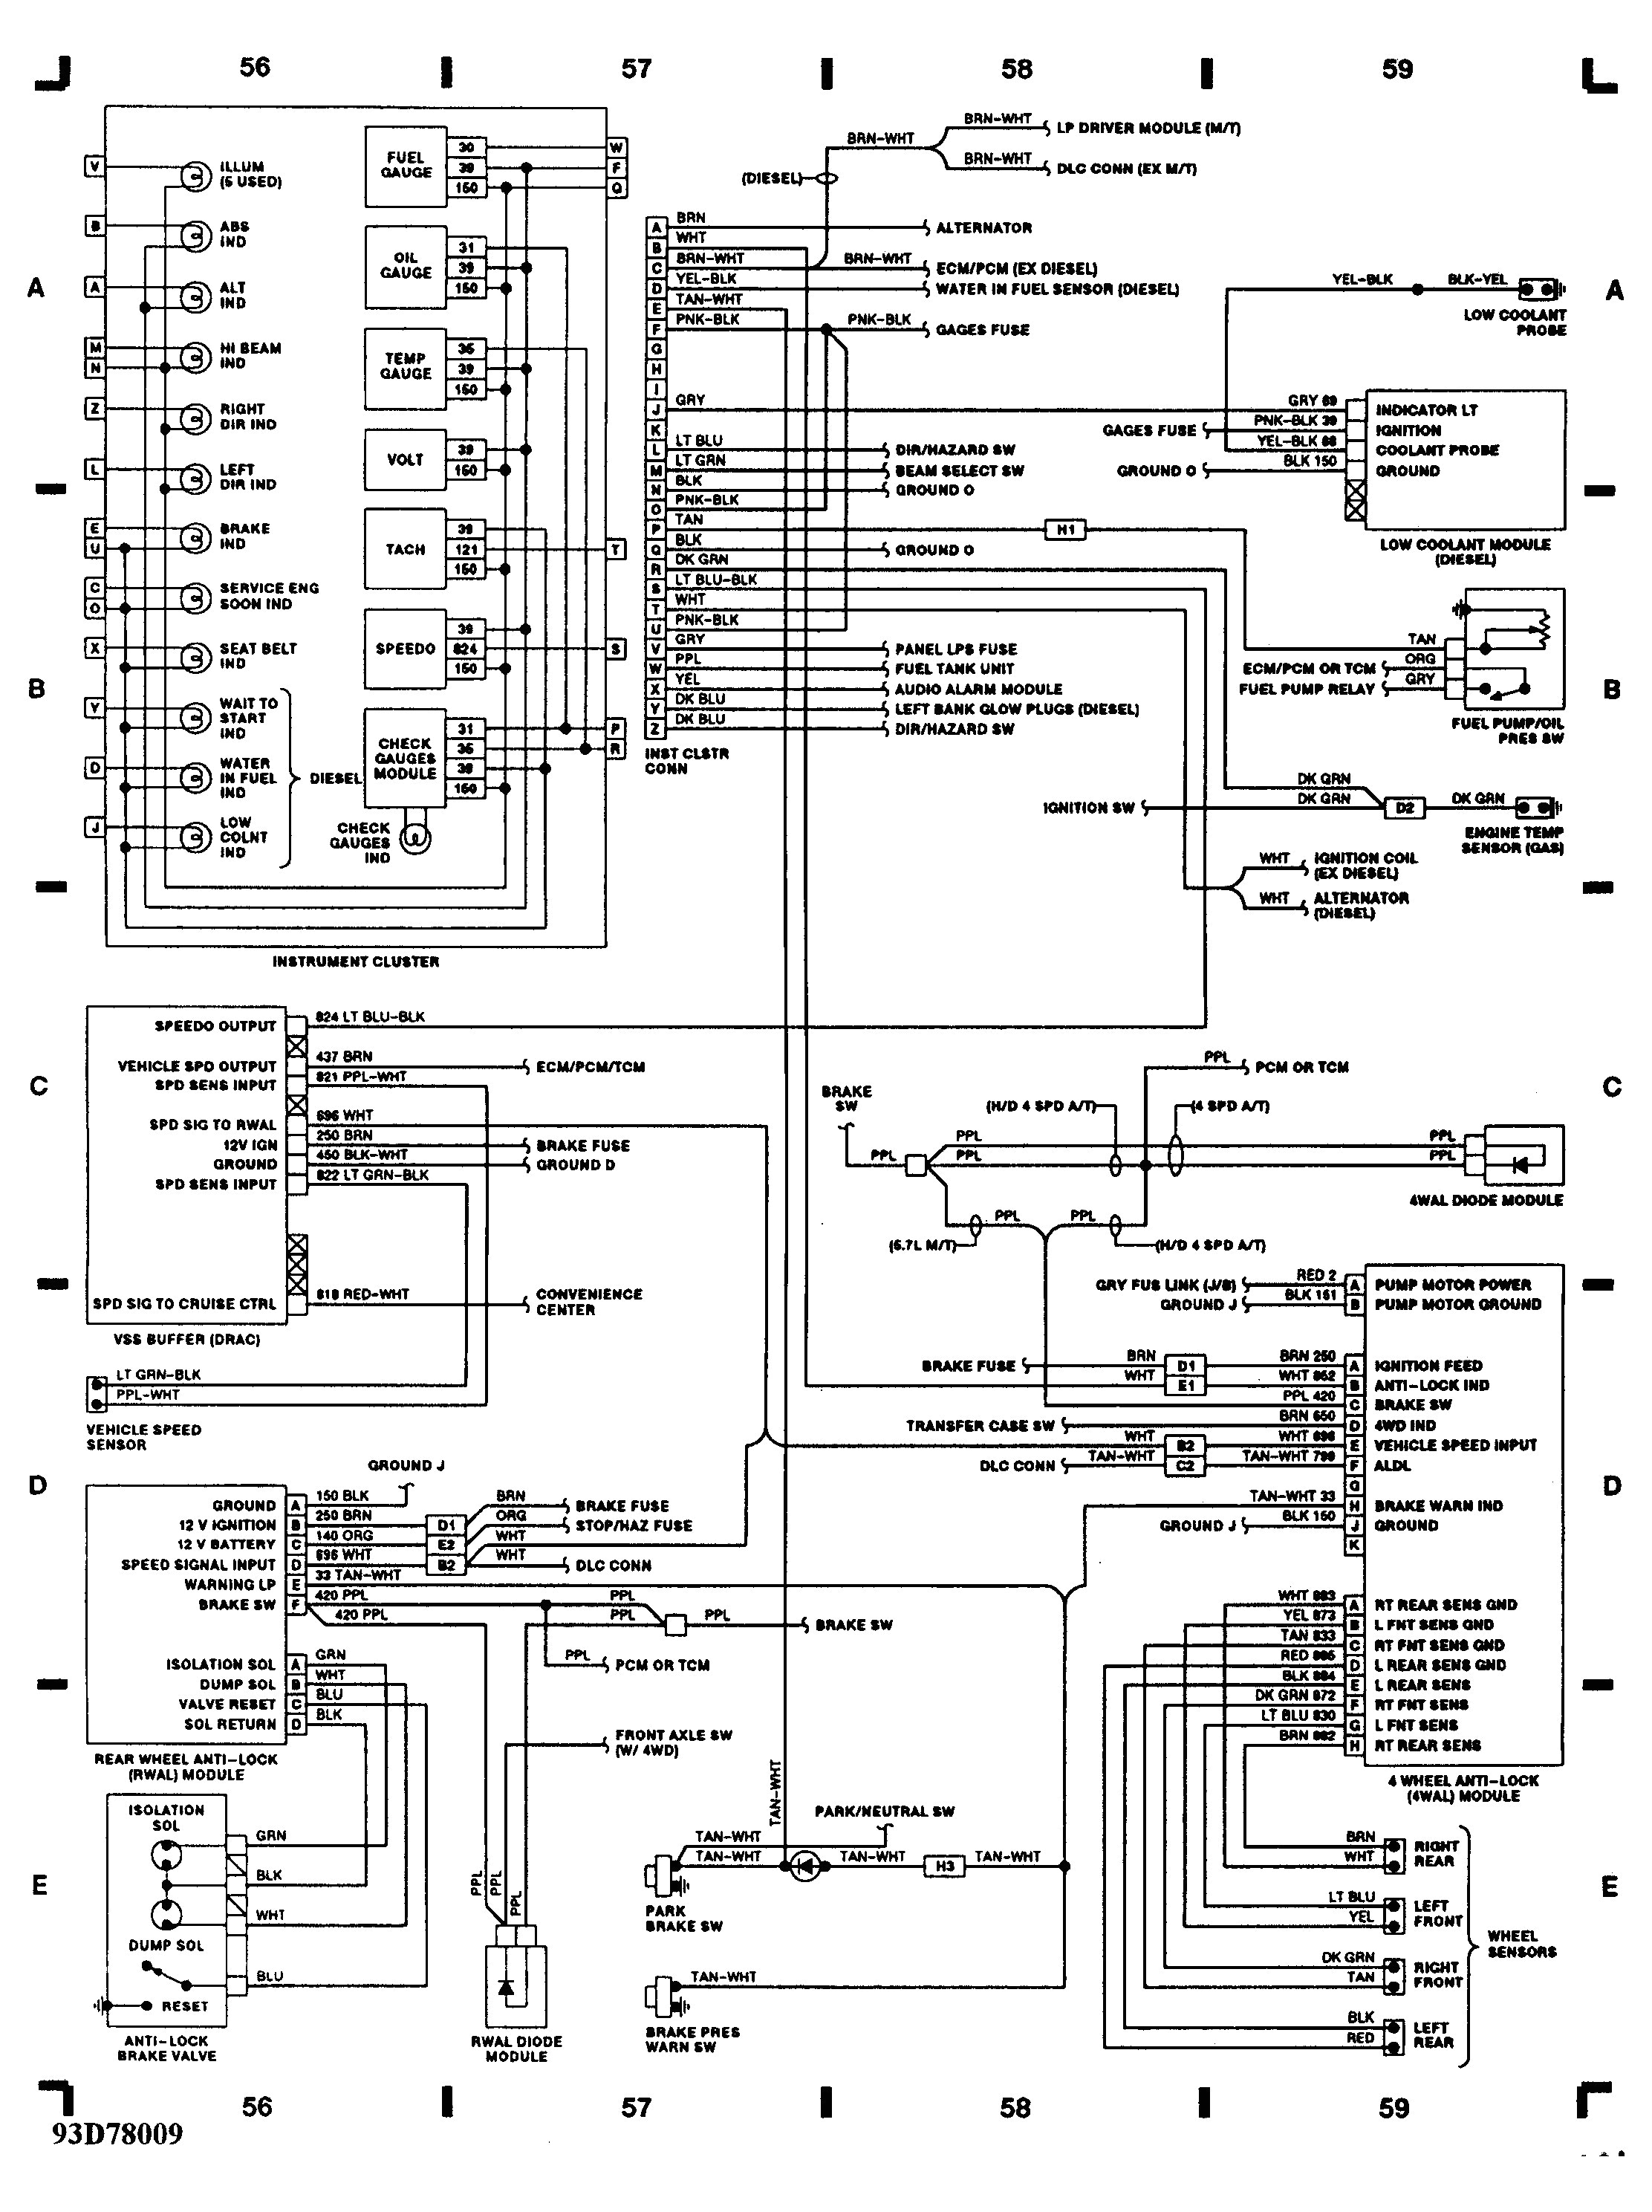 2000 chevy silverado transmission diagram wiring diagrams for silverado wiring diagram radio 2000 silverado transmission wiring